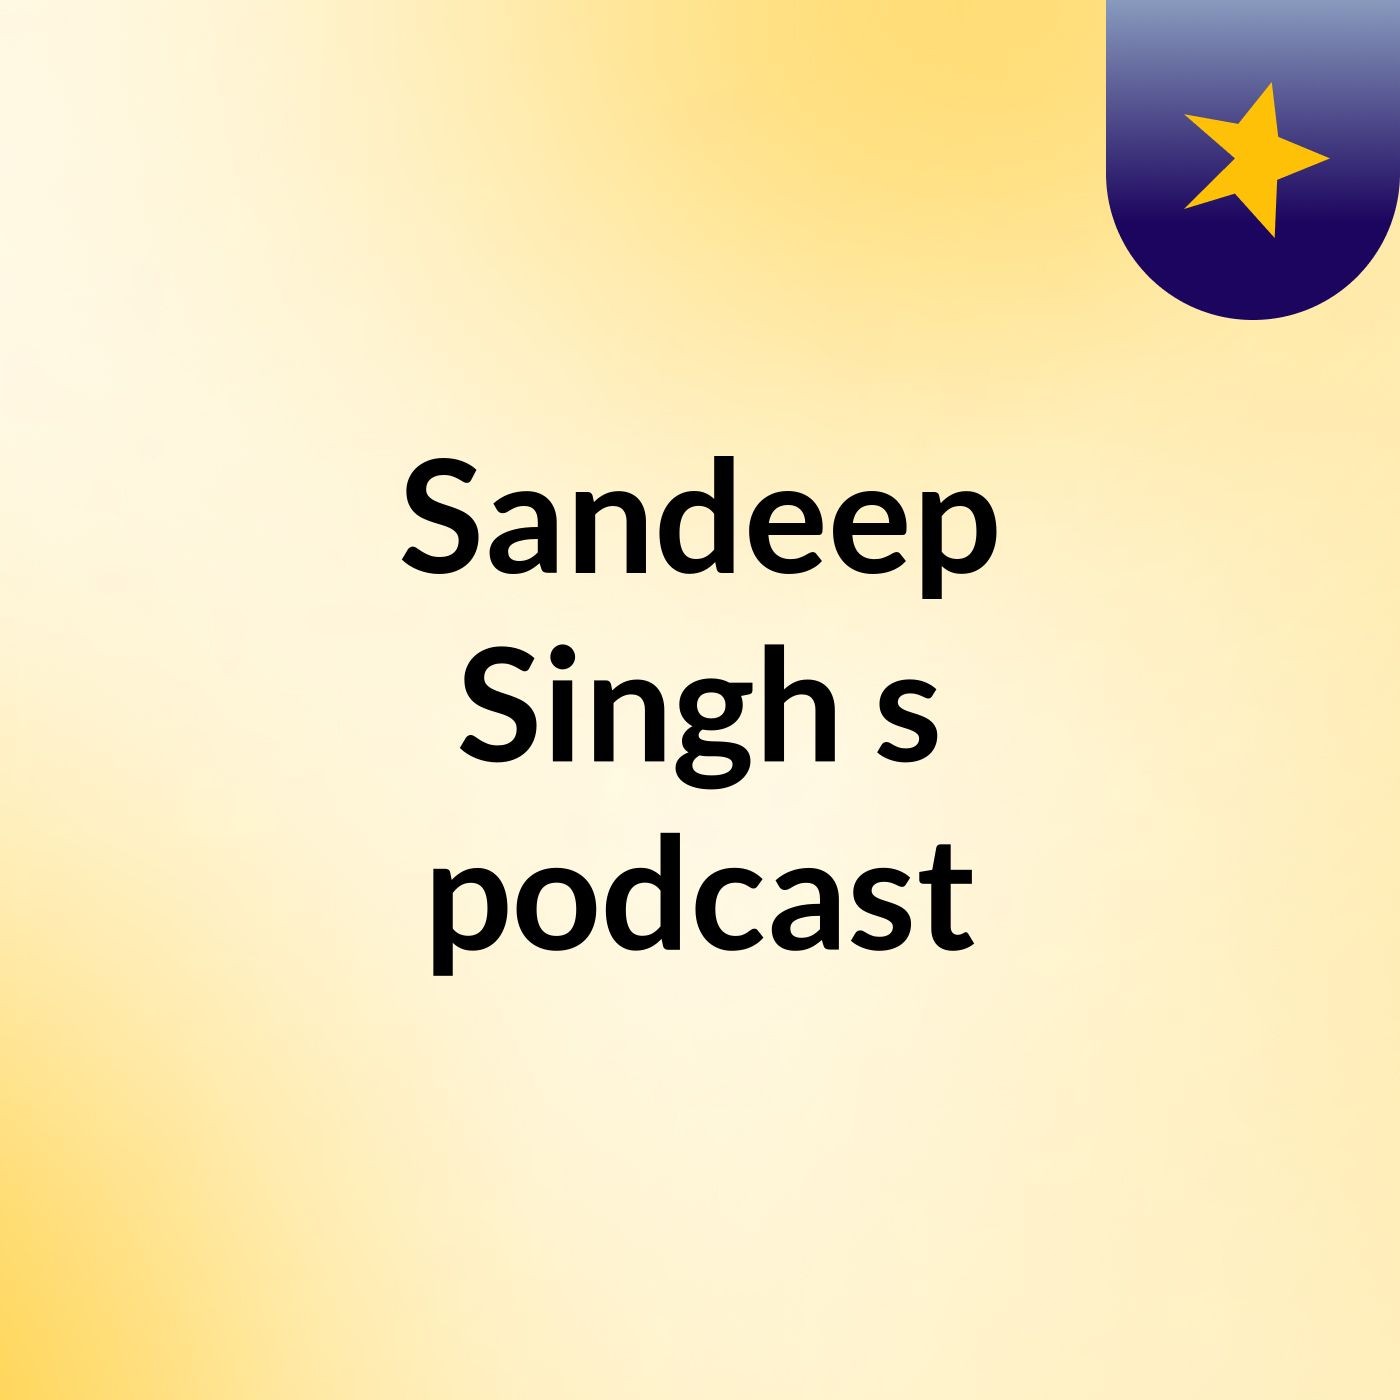 Episode 6 - Sandeep Singh's podcast